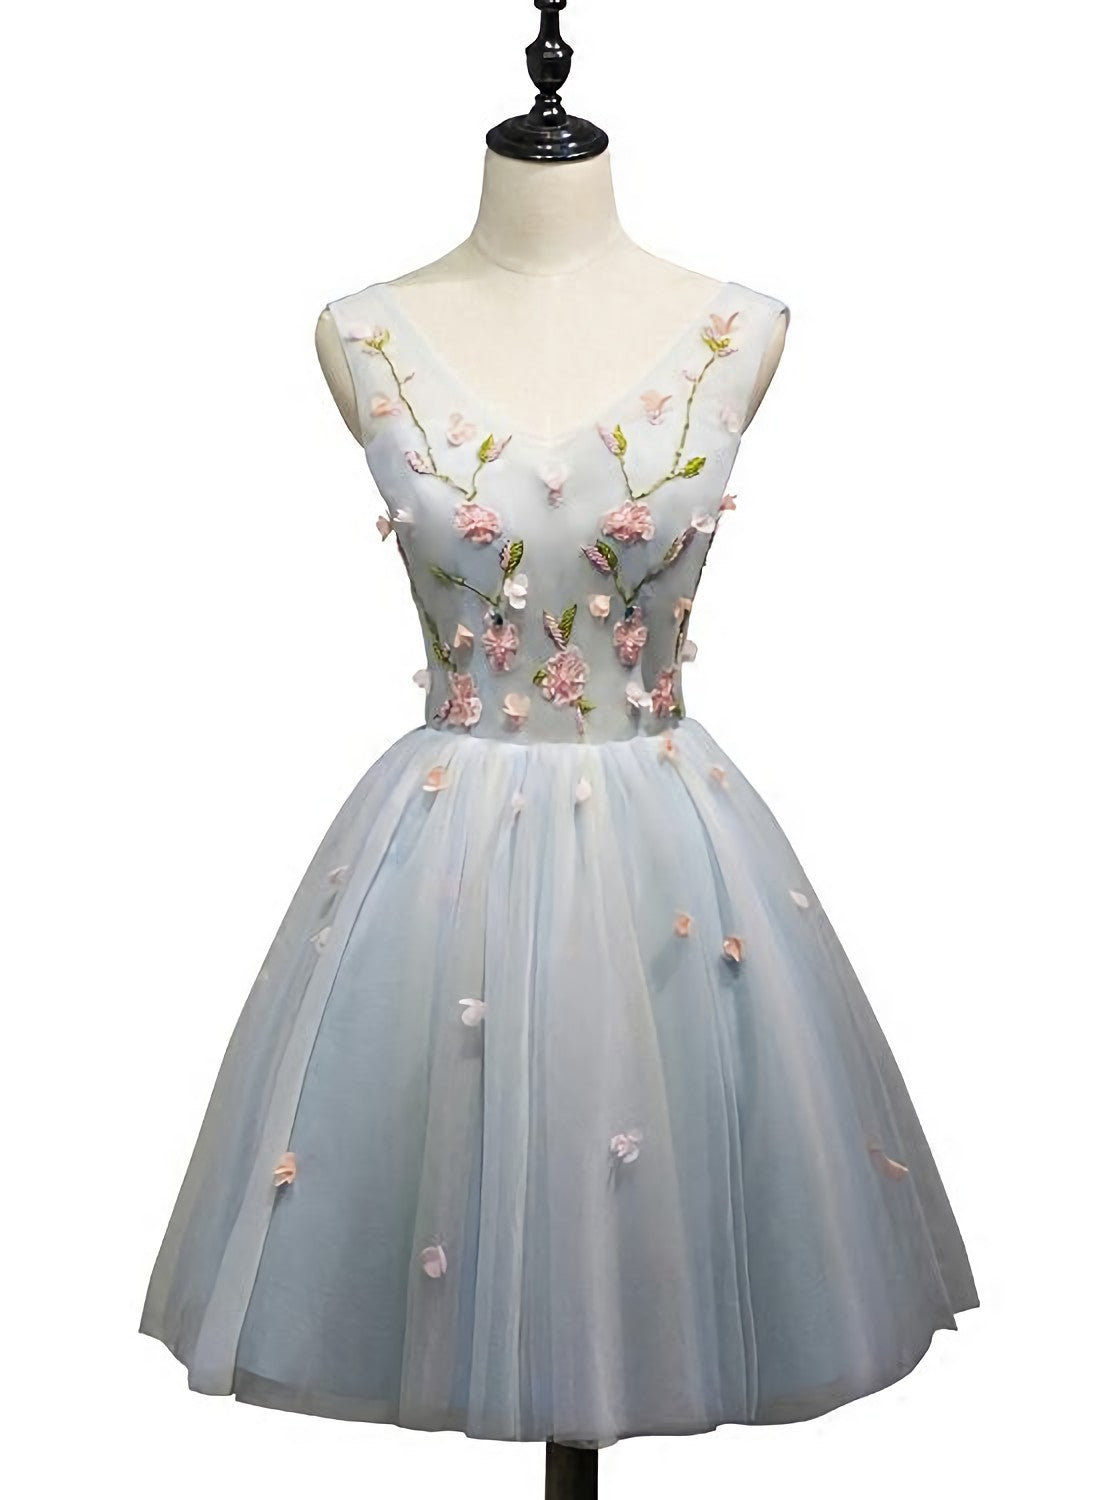 Fancy Outfit, Cute Light Blue Tulle Short Party Dress, Light Blue Formal Dress, Teen Homecoming Dress